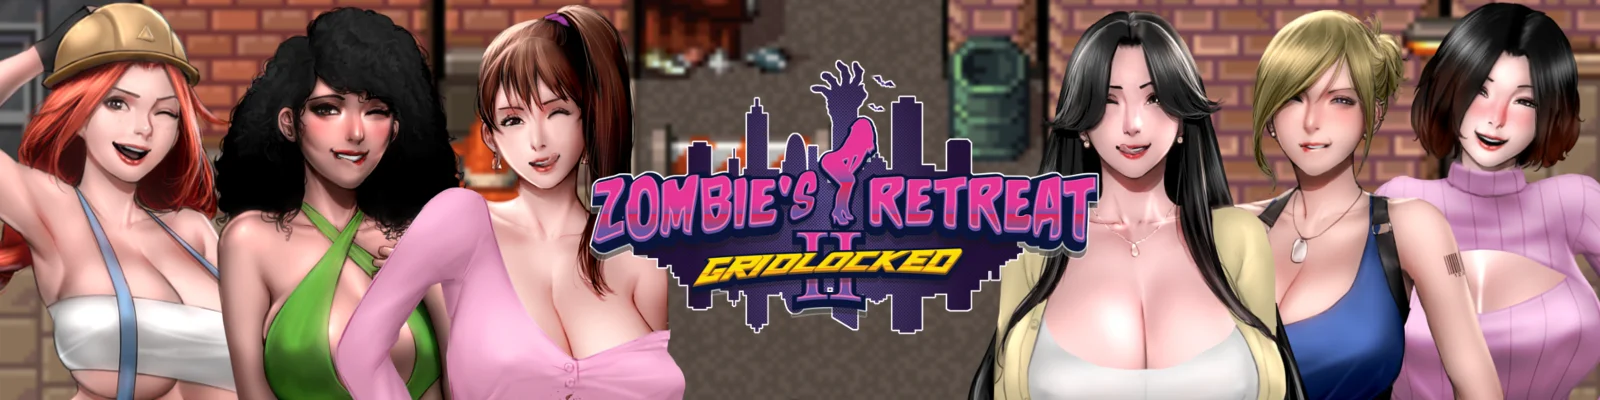 Zombie's Retreat 2: Gridlocked v.0.18.1 Beta